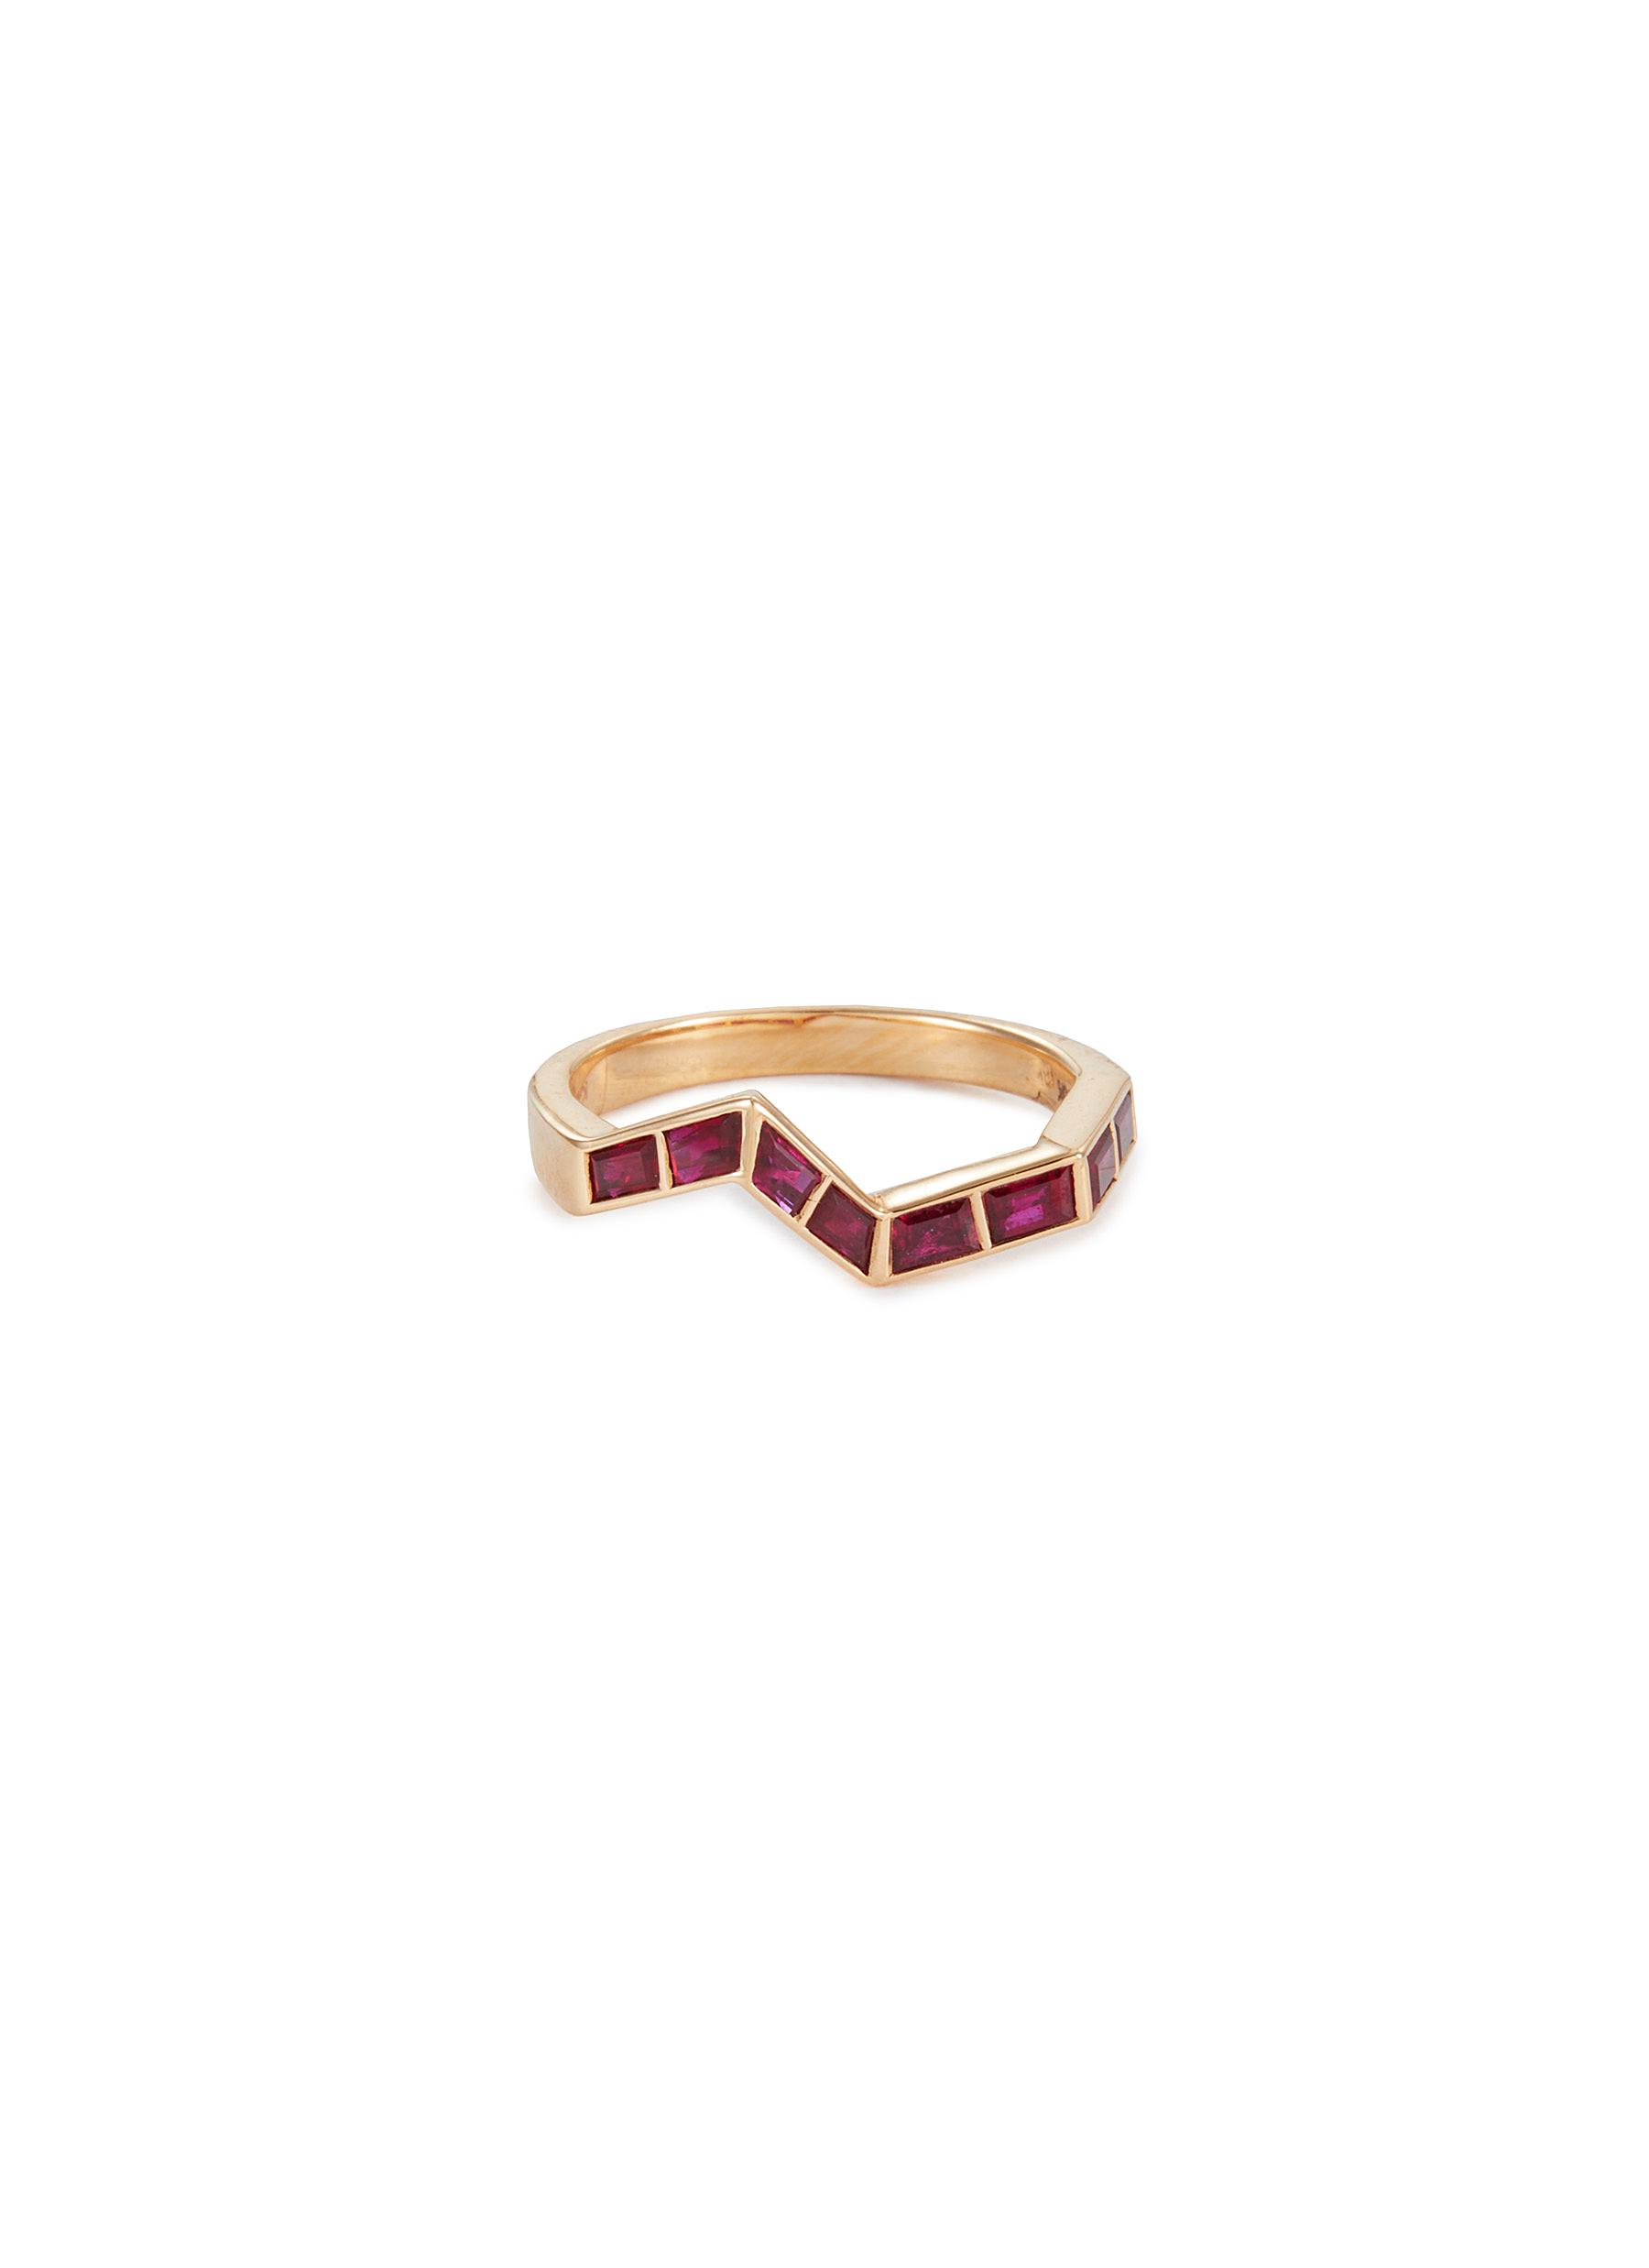 KAVANT & SHARART ‘Origami Ziggy' Ruby 18K Gold Step Ring